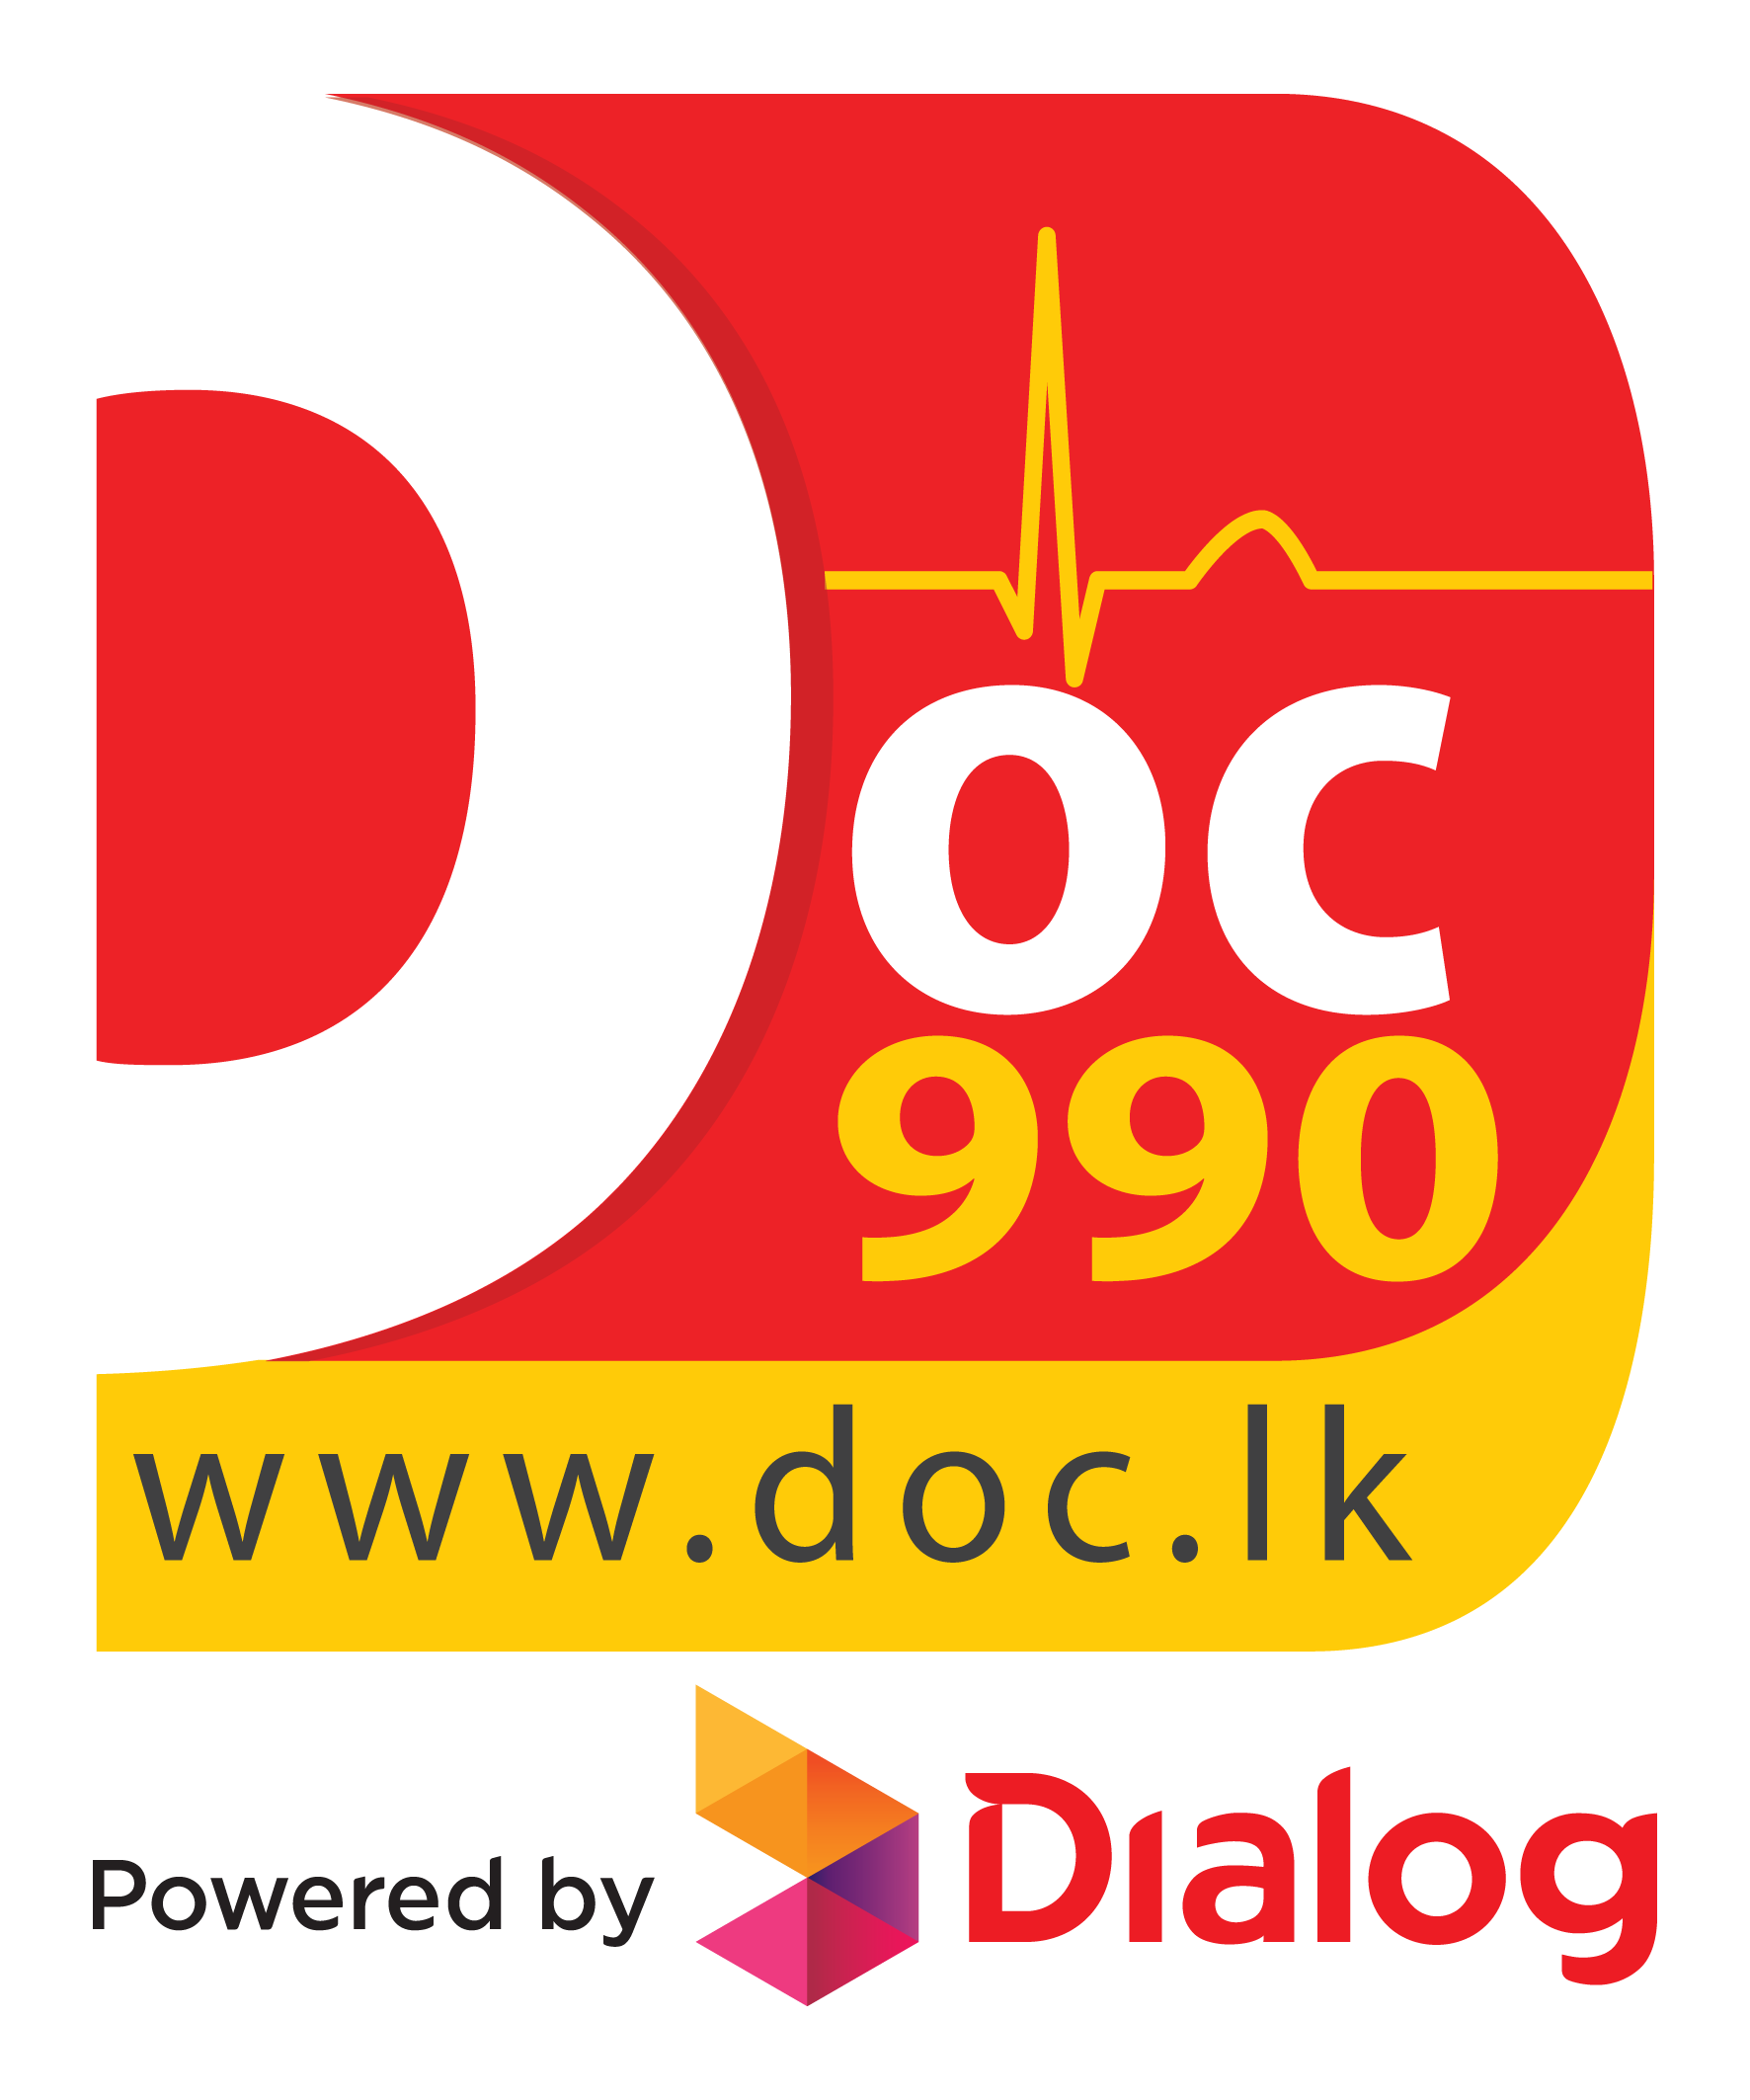 Doc990 Brand Logo